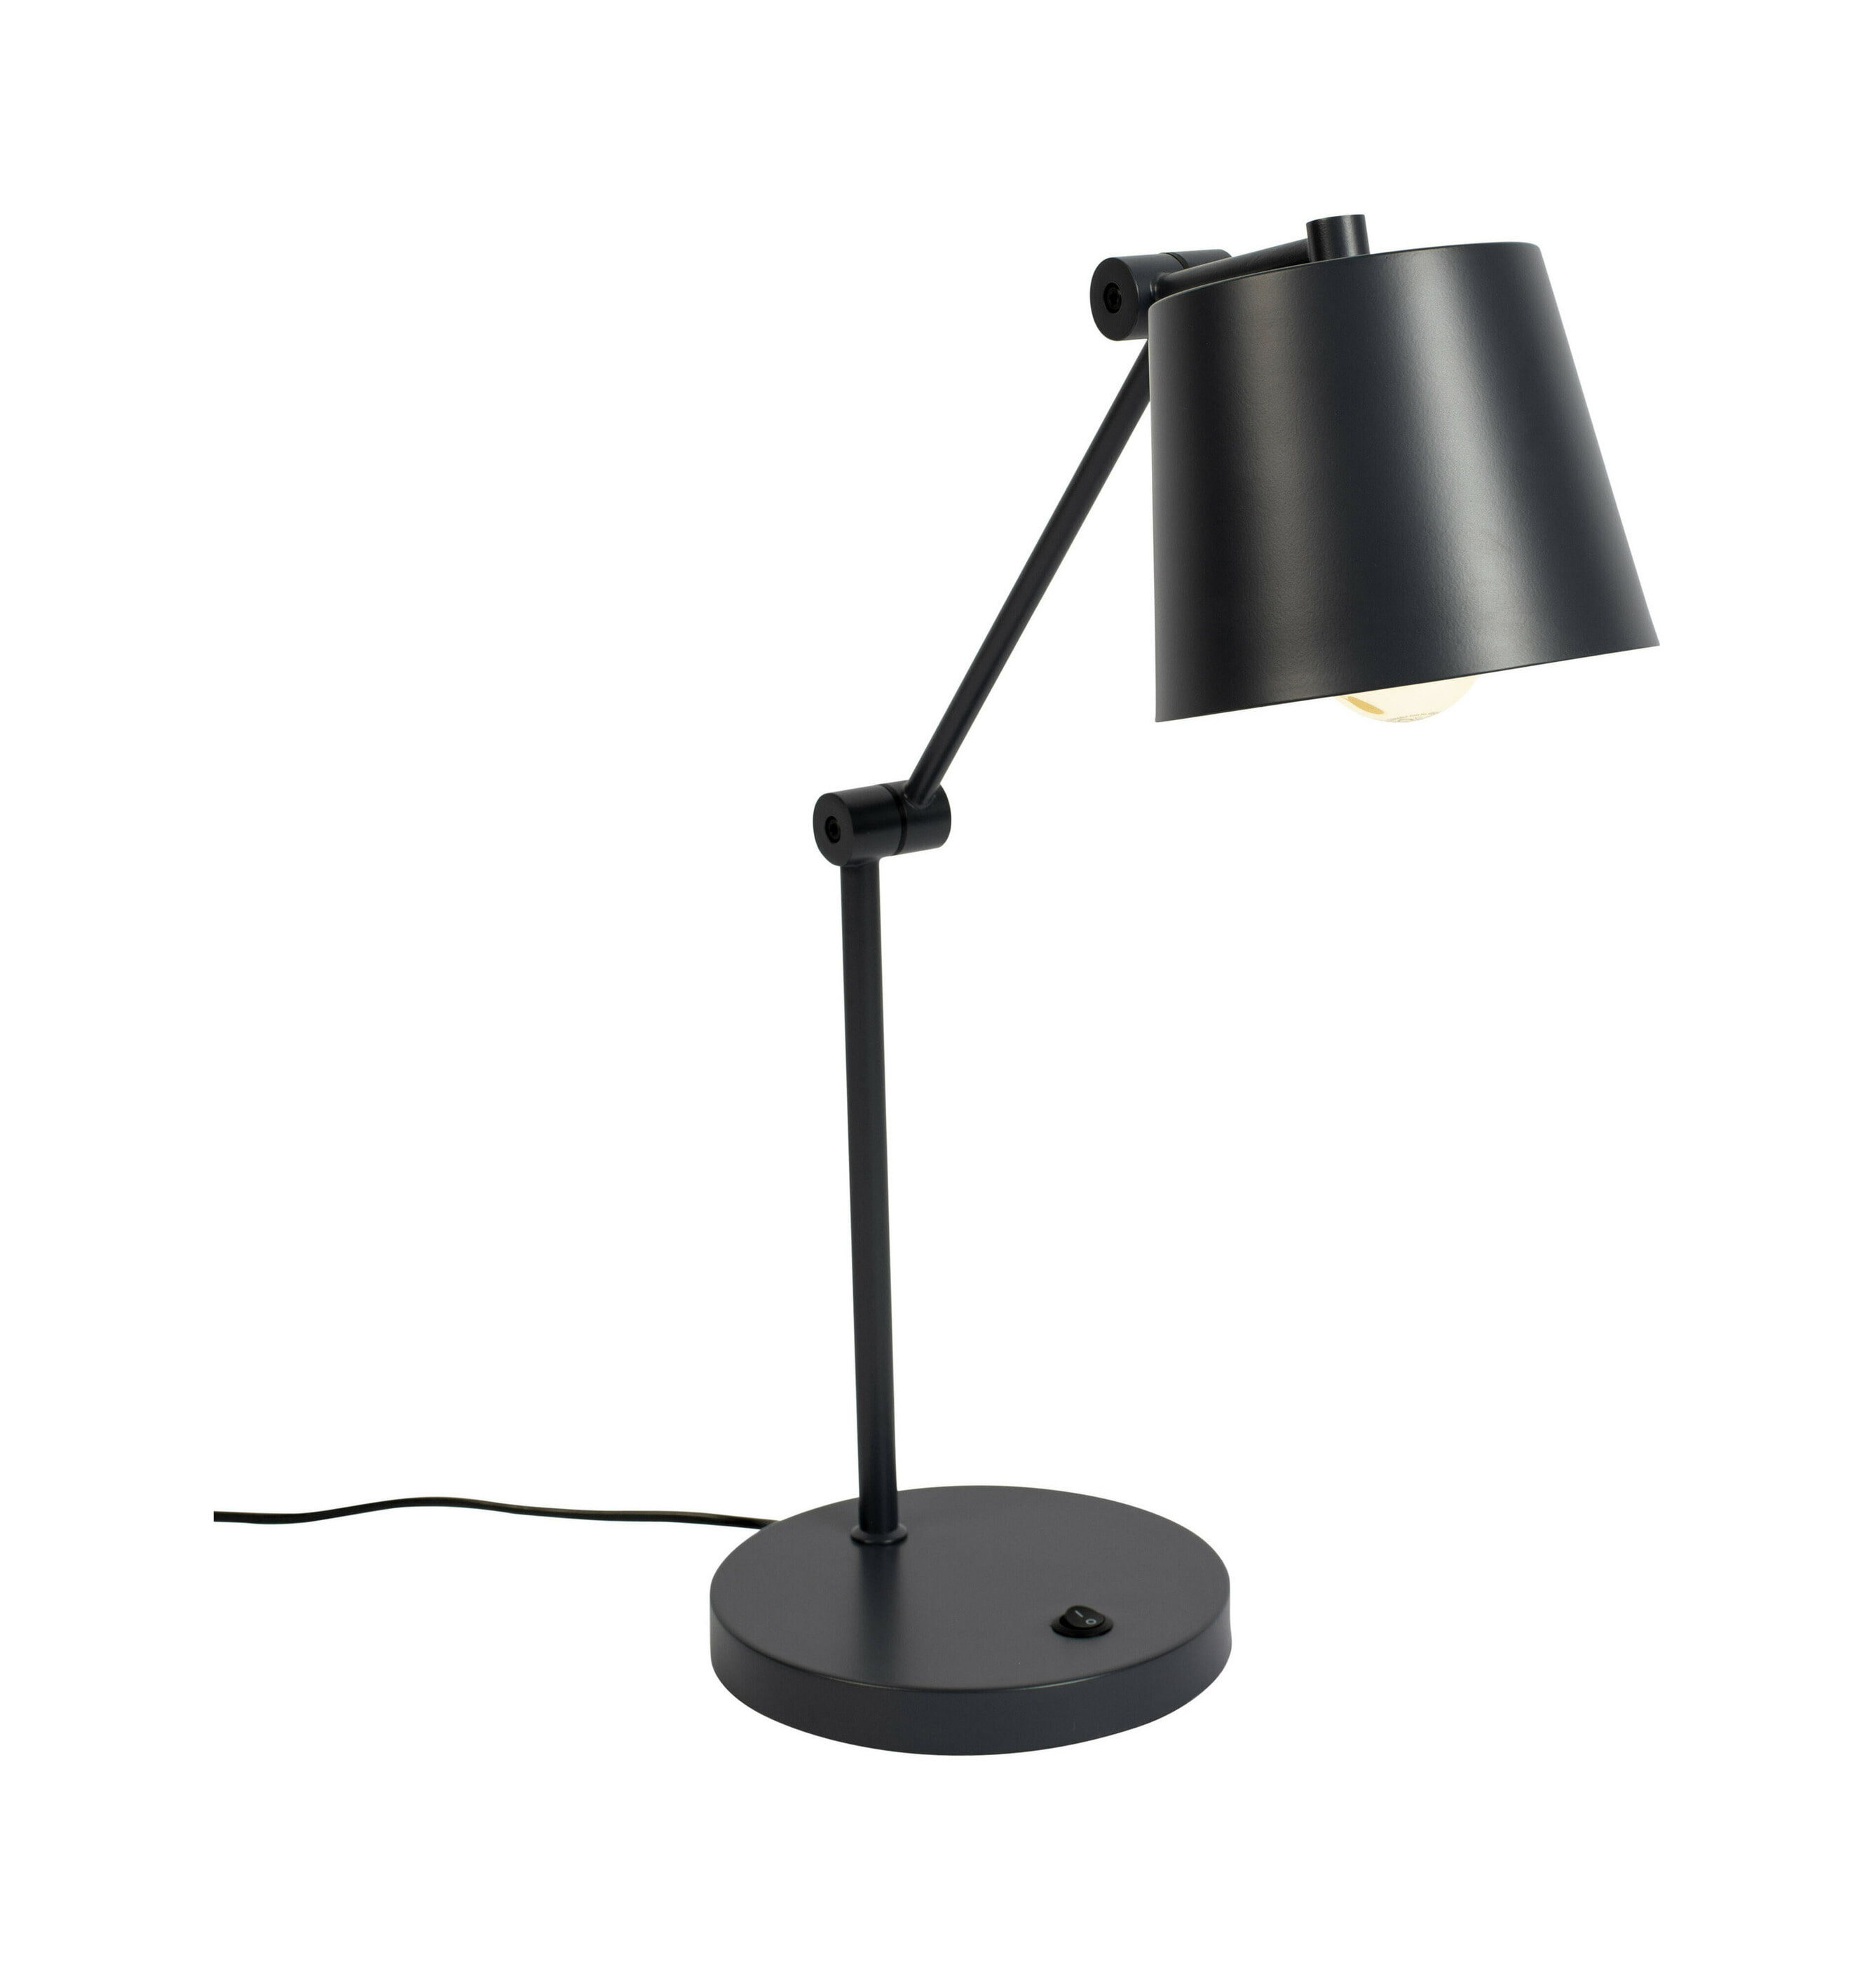 ZILT Tafellamp Bret 60cm hoog - Zwart